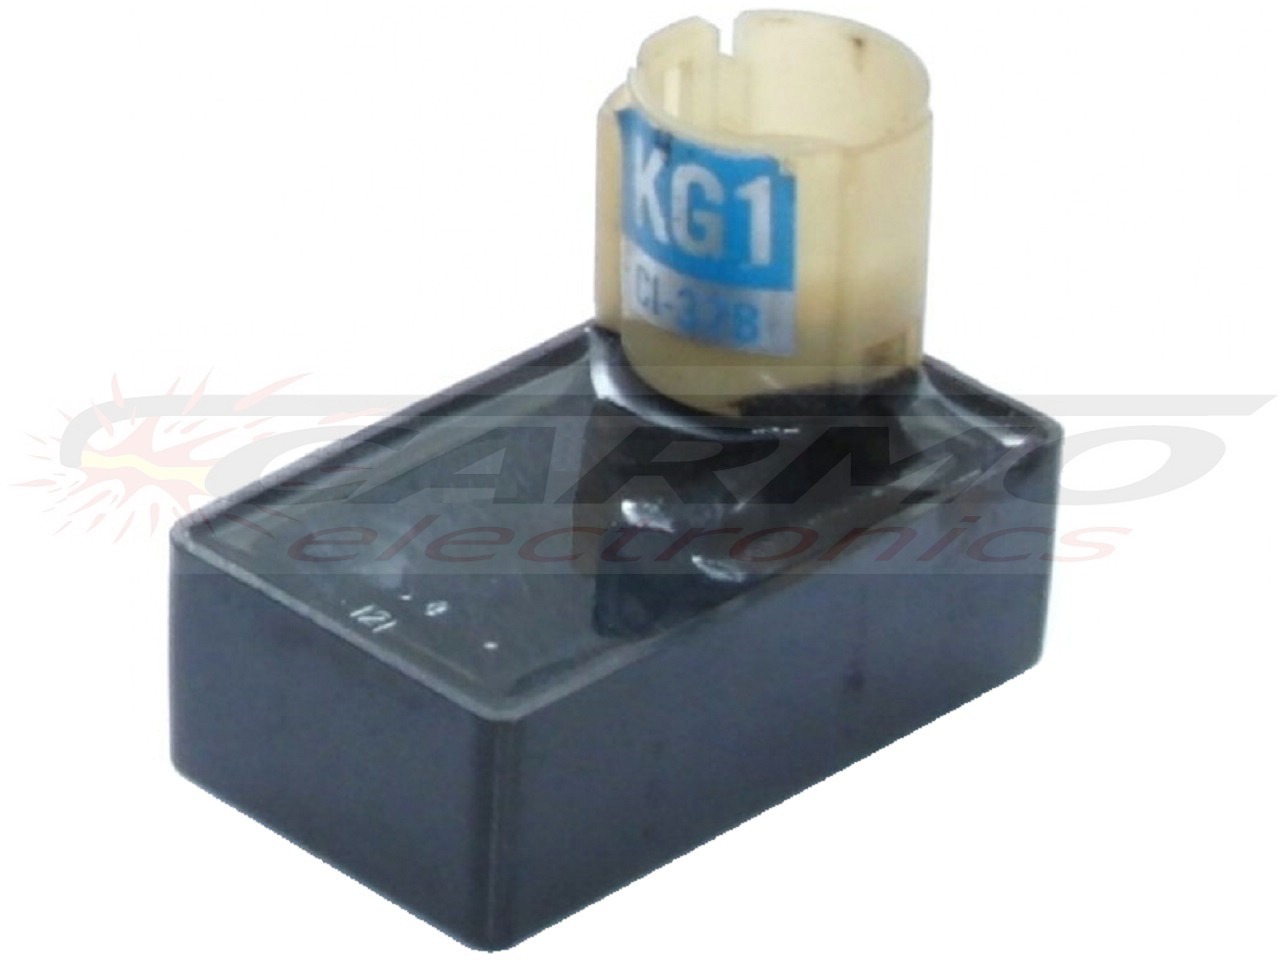 XL200 XL200R igniter ignition module CDI TCI Box (KG1, CI-37B)